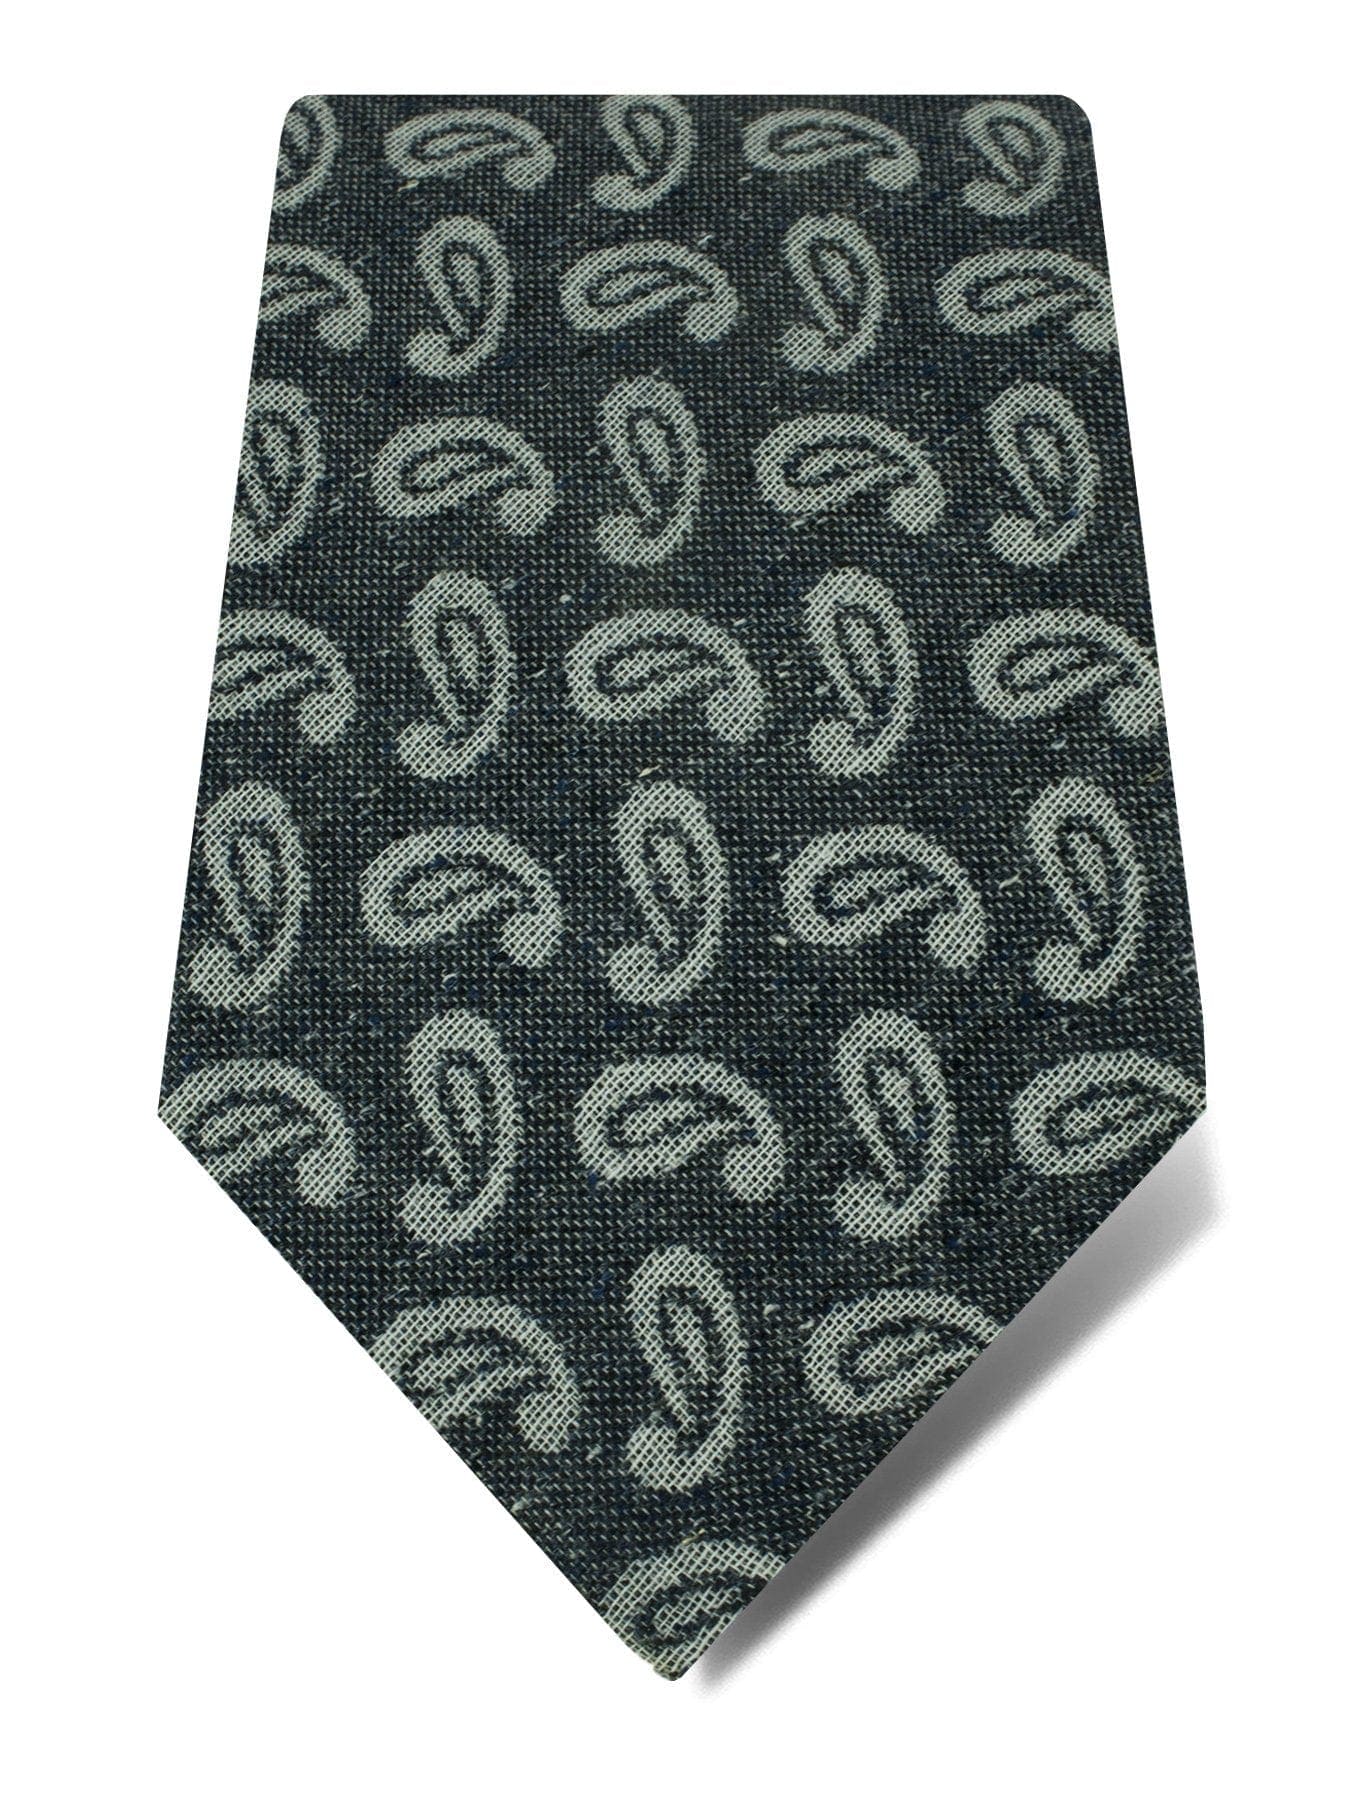 Navy Woven Cotton & Silk Tie with White Paisley